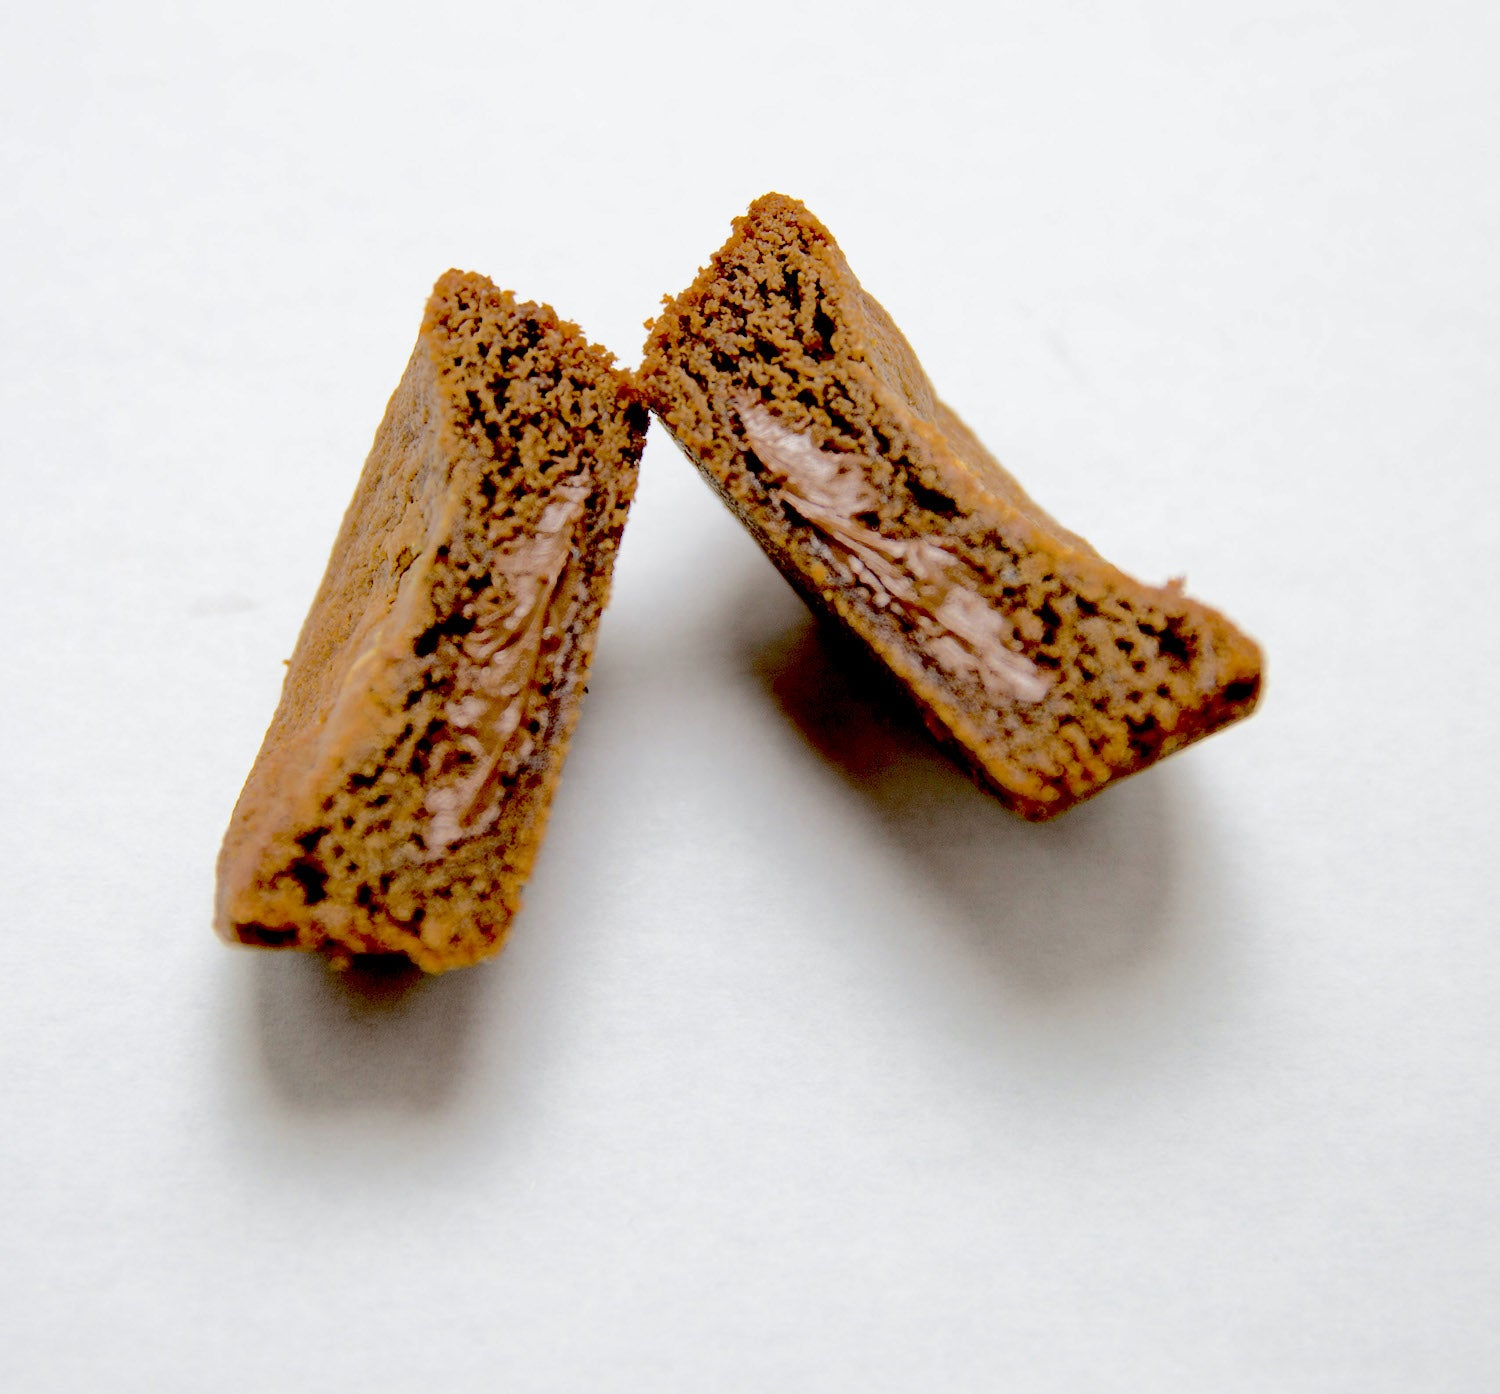 Nutella — Nutella dough filled with Nutella Spread (Hazelnut Spread with Cocoa)